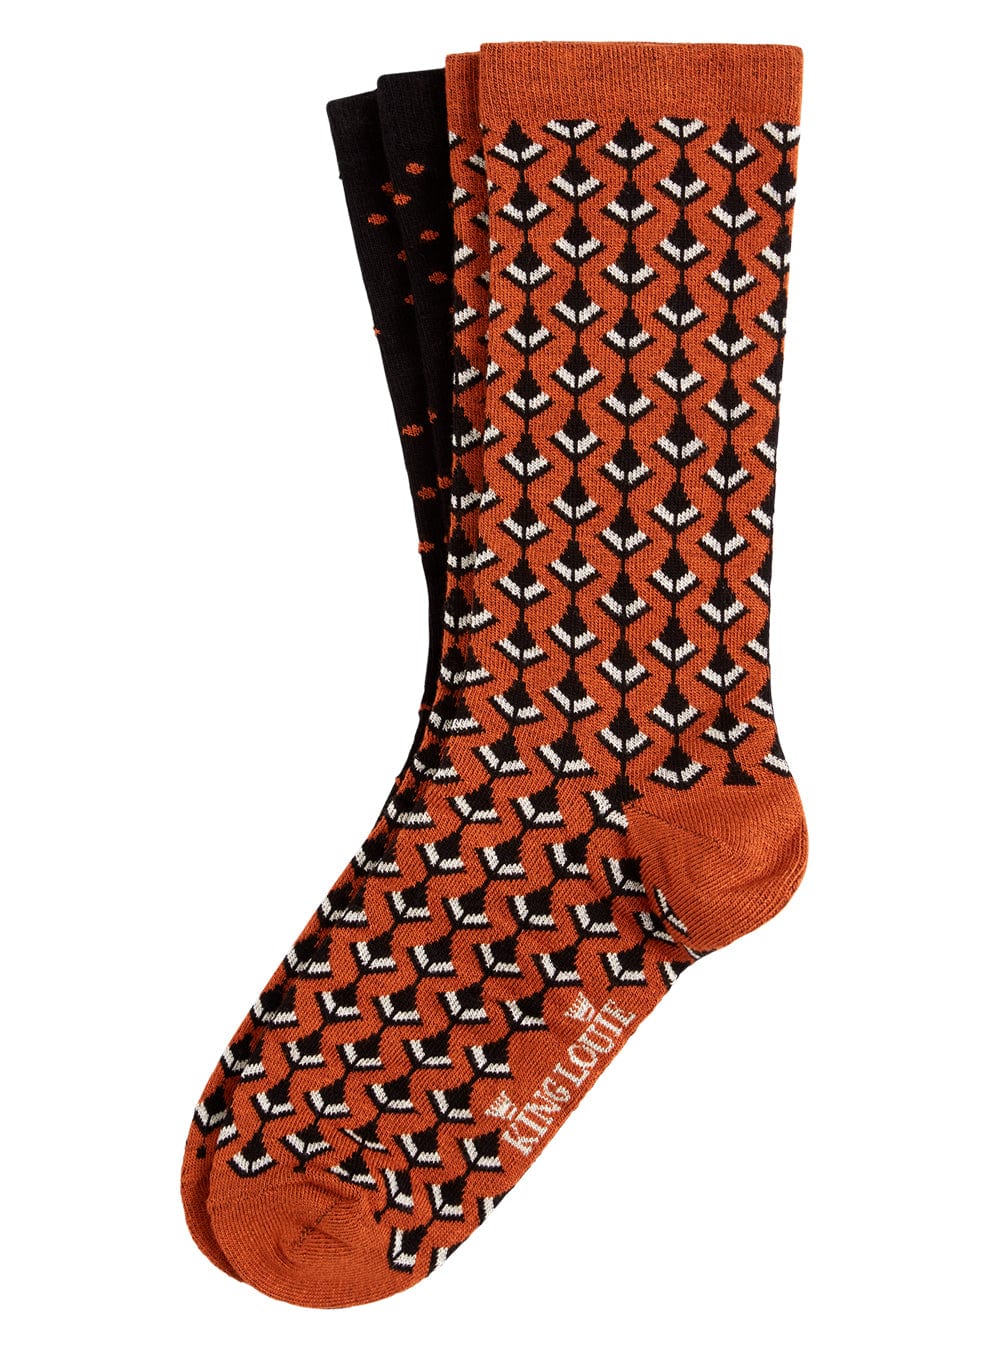 Orange sokker fra King Louie med gøyalt mønster i sort og hvit. 